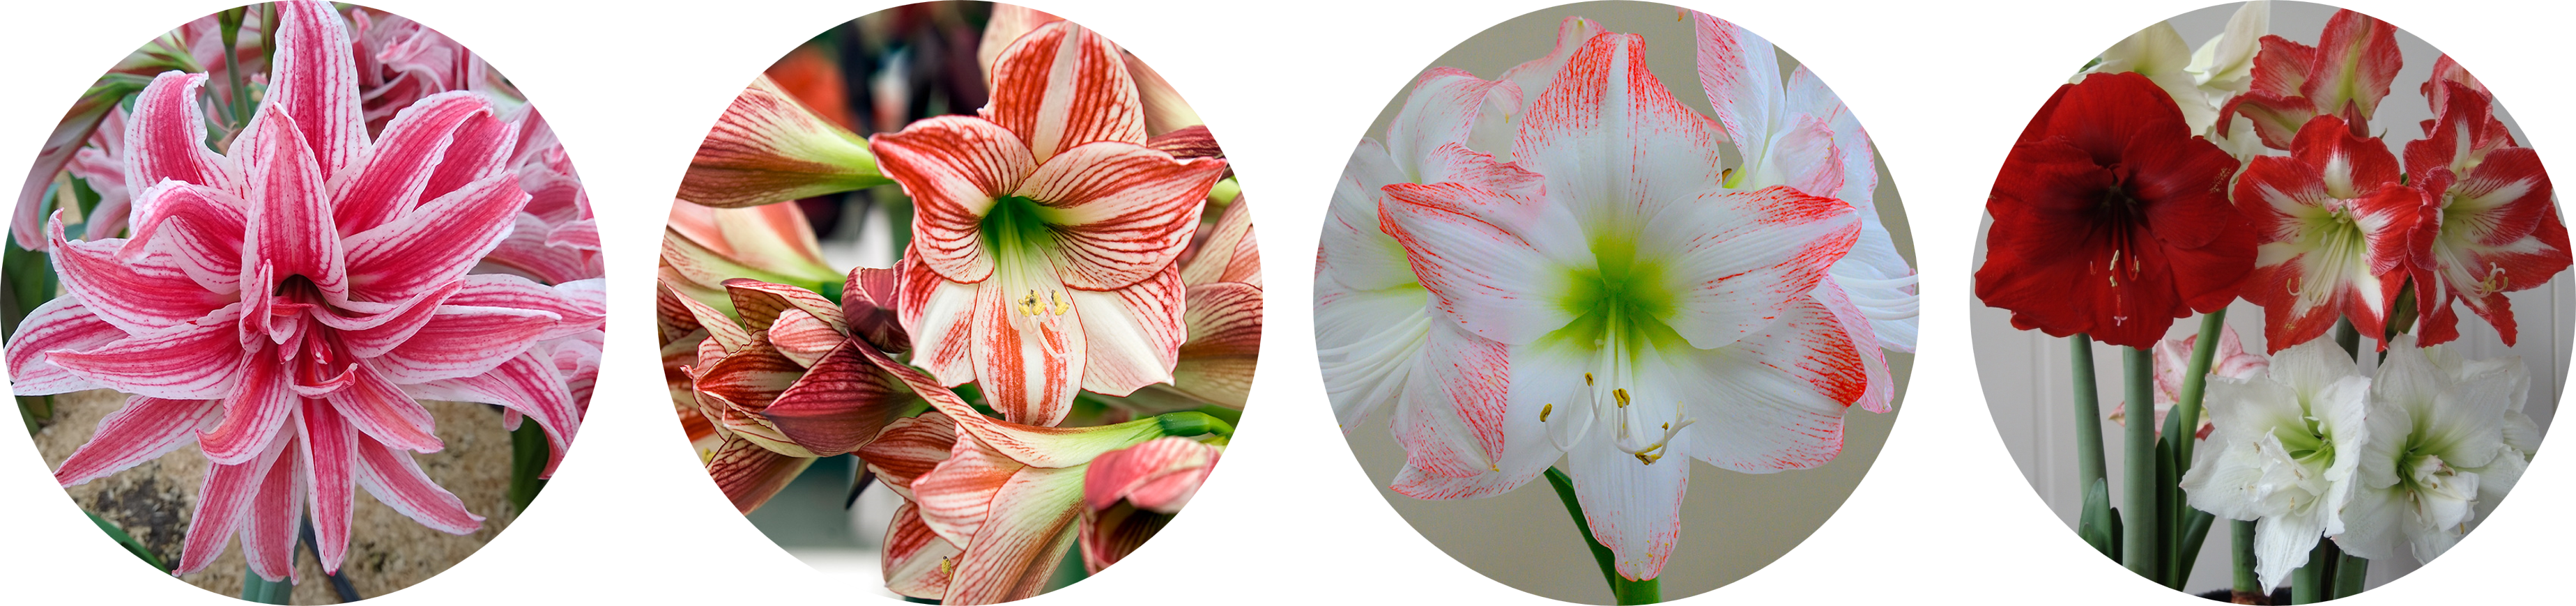 Amaryllis in bloom